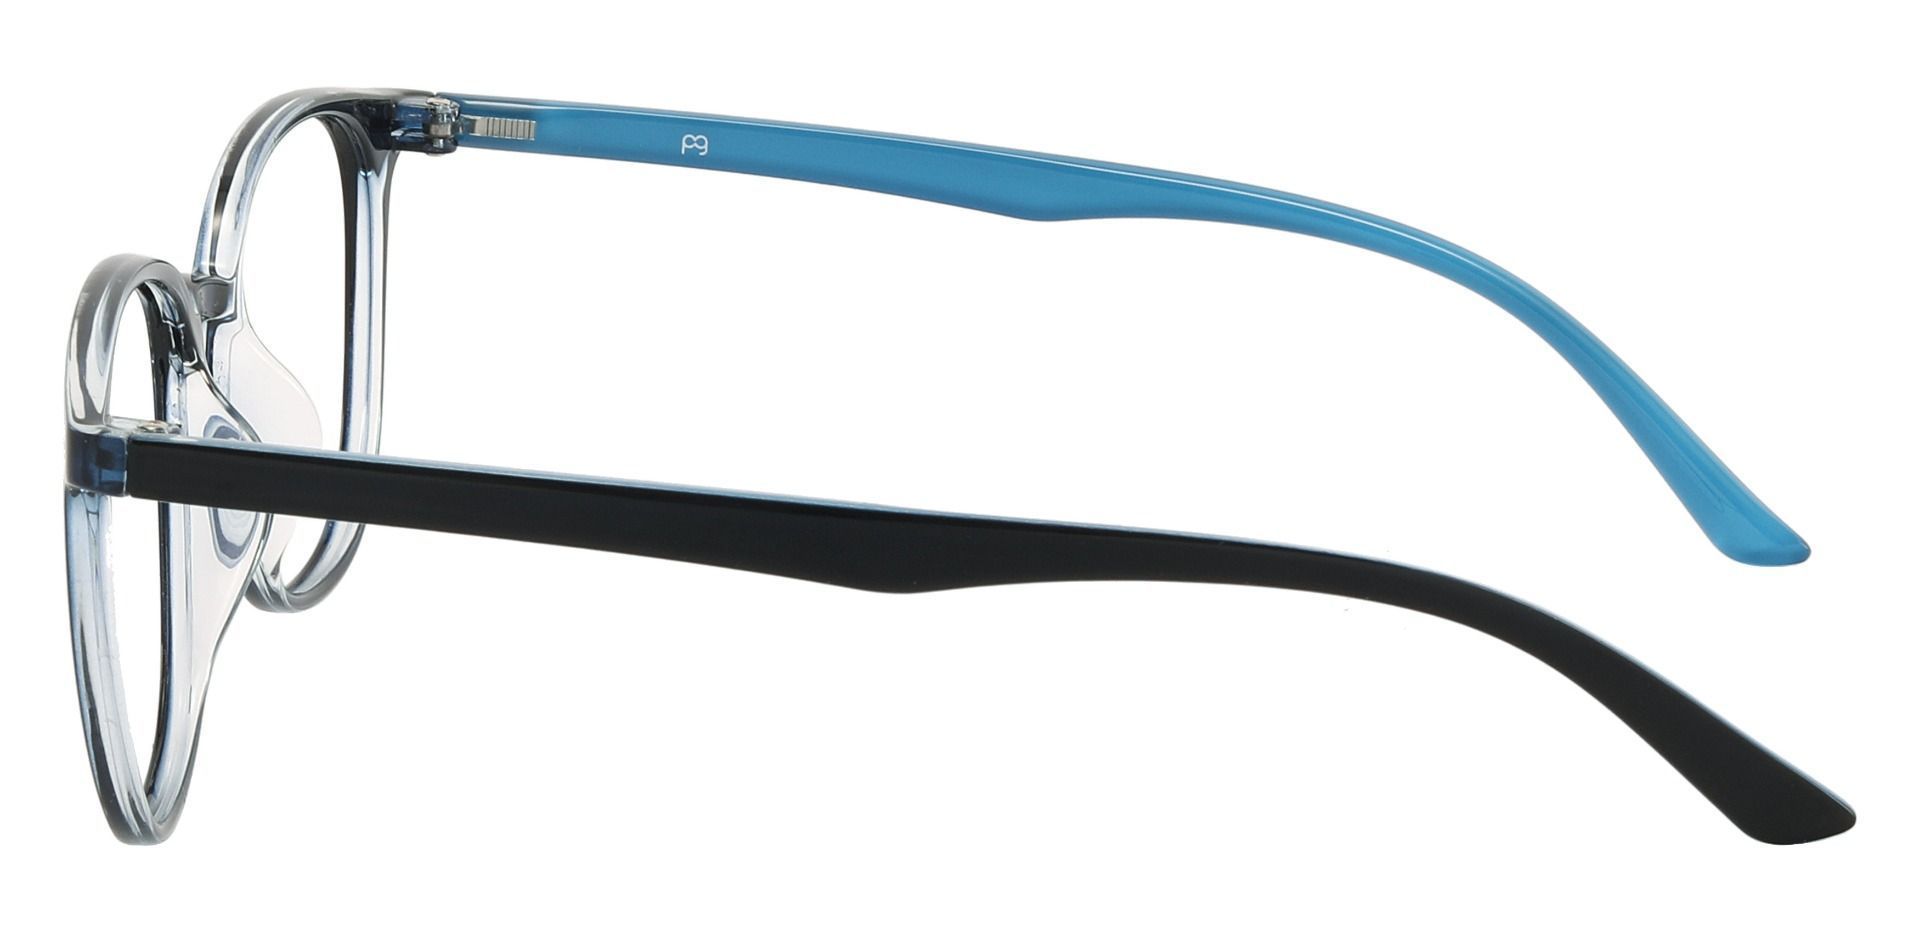 Kelso Square Eyeglasses Frame - Blue